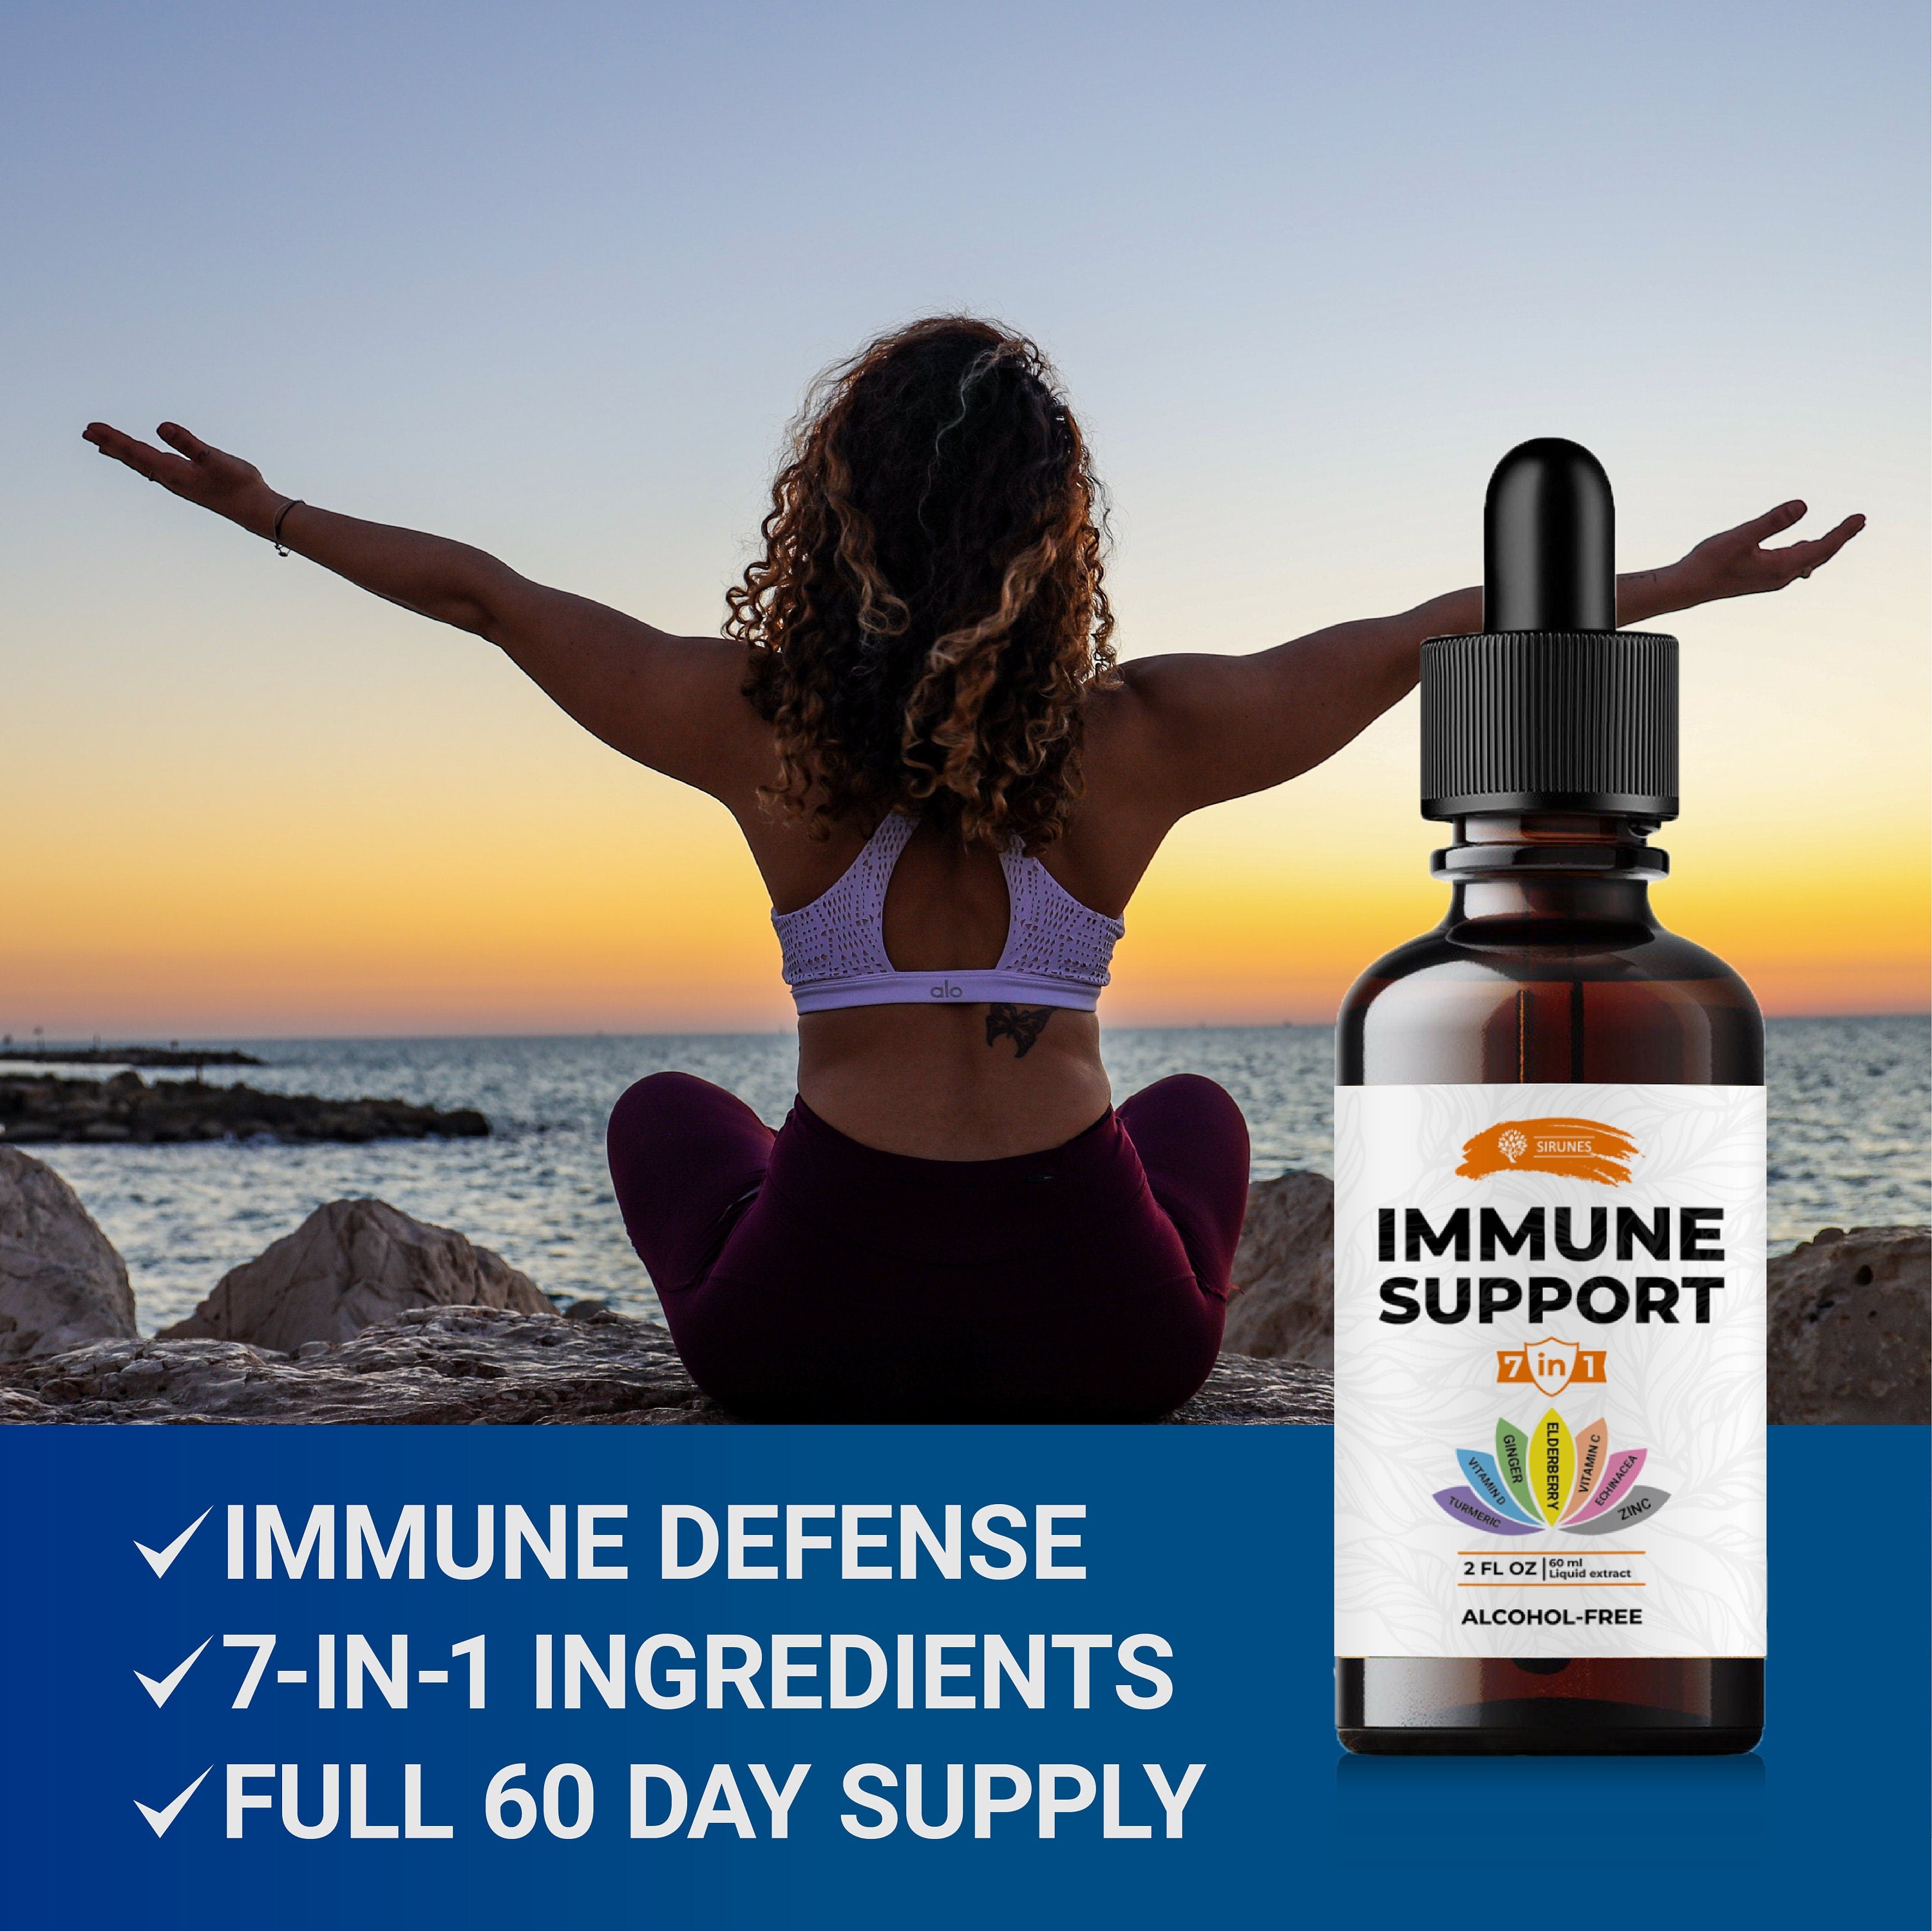 7in1 Immune Defense Zinc Vitamin C D3 Liquid Immune Support with Echinacea Turmeric Ginger and Elderberry - Immunity Respiratory Health 2oz